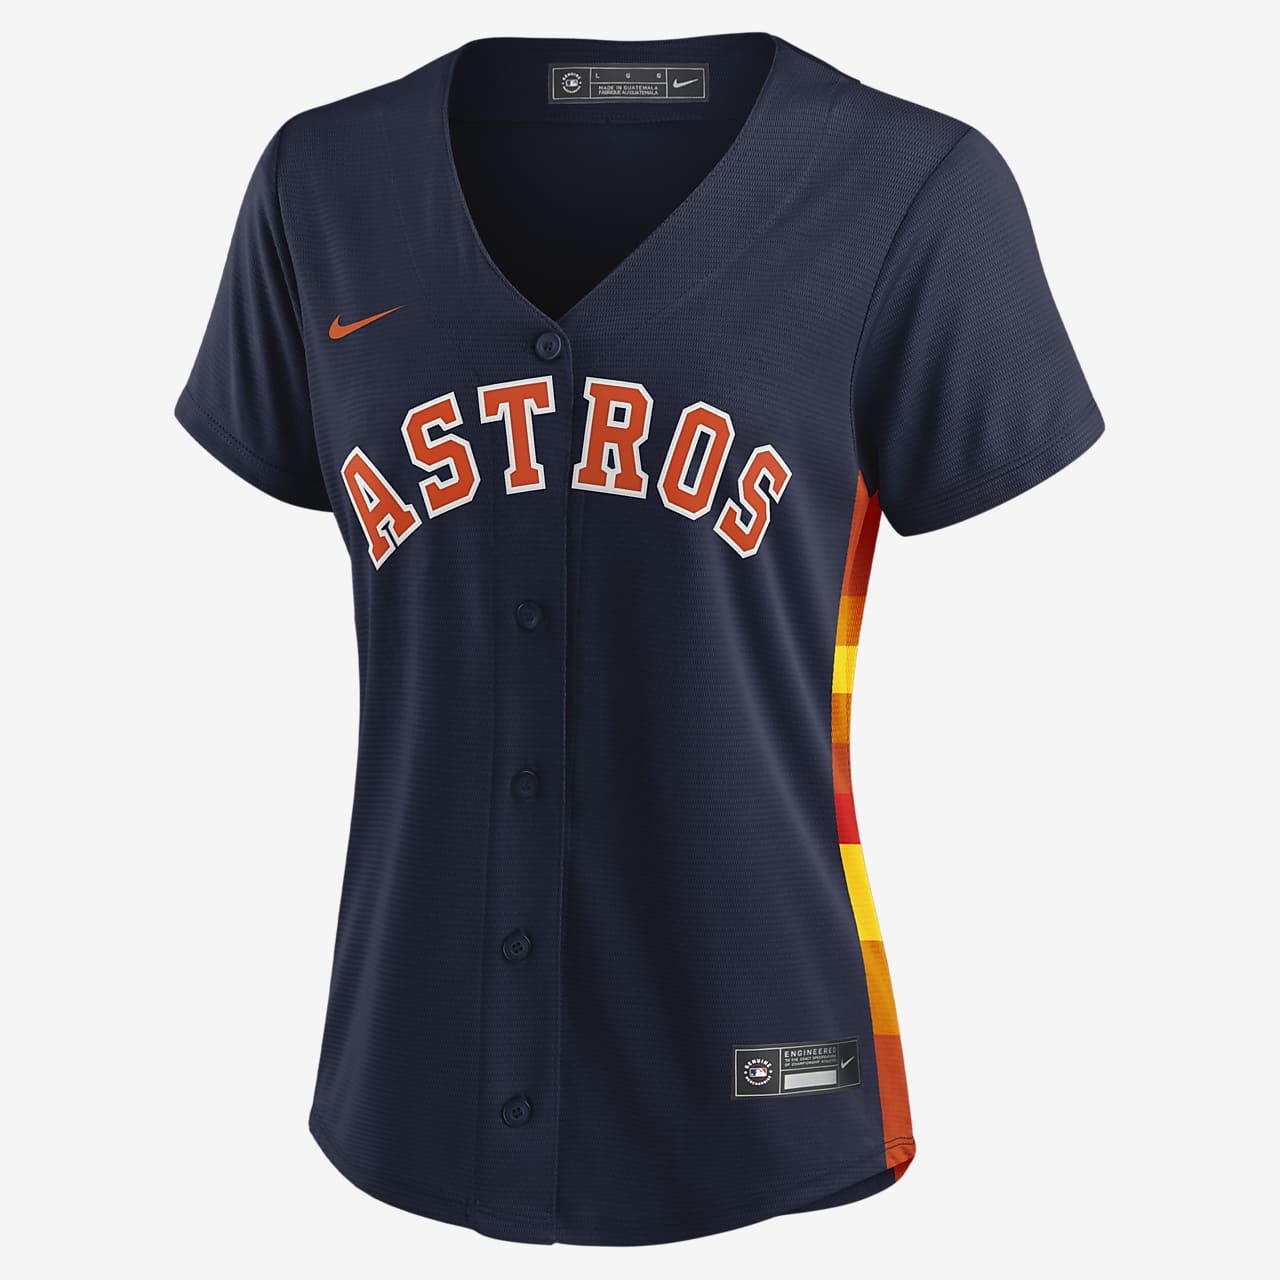 Nike Women's Houston Astros Official Replica Jersey